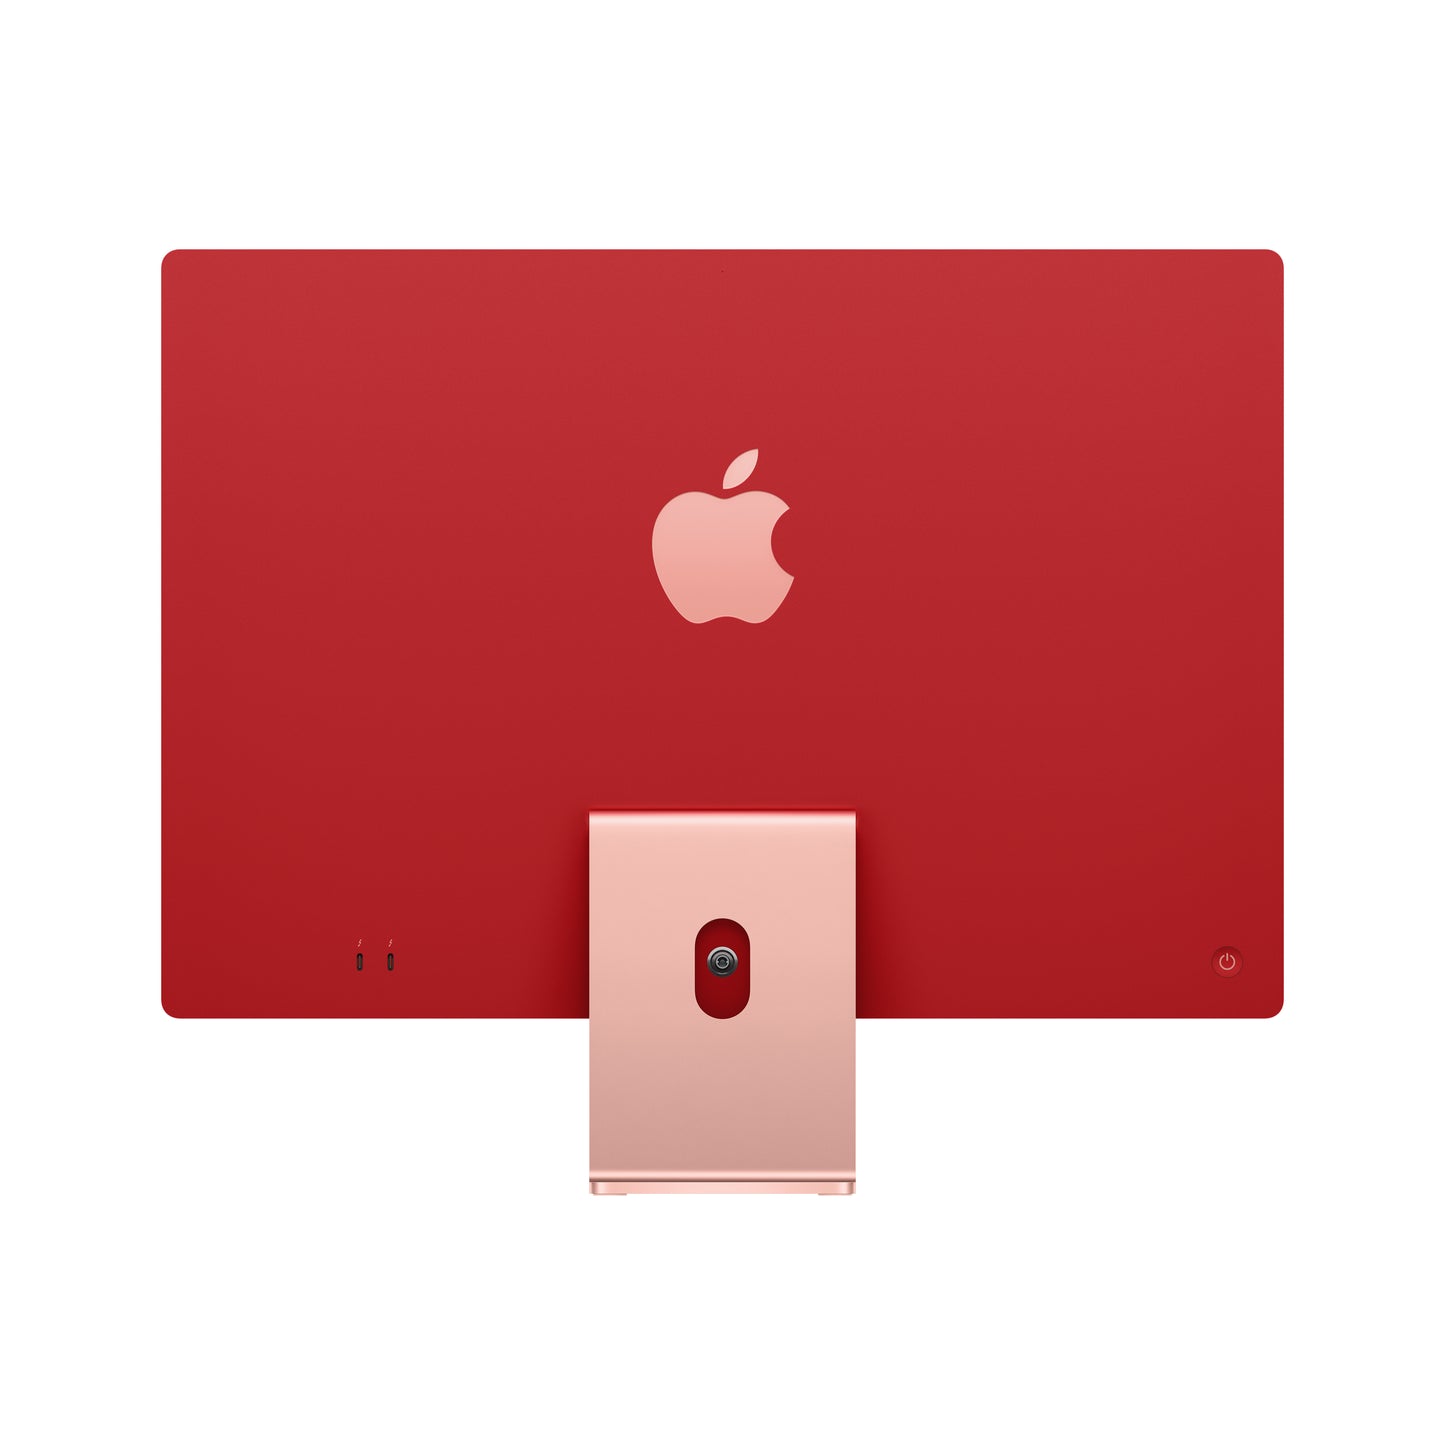 24-inch iMac with Retina 4.5K display: Apple M1 chip with 8_core CPU and 8_core GPU, 256GB - Pink